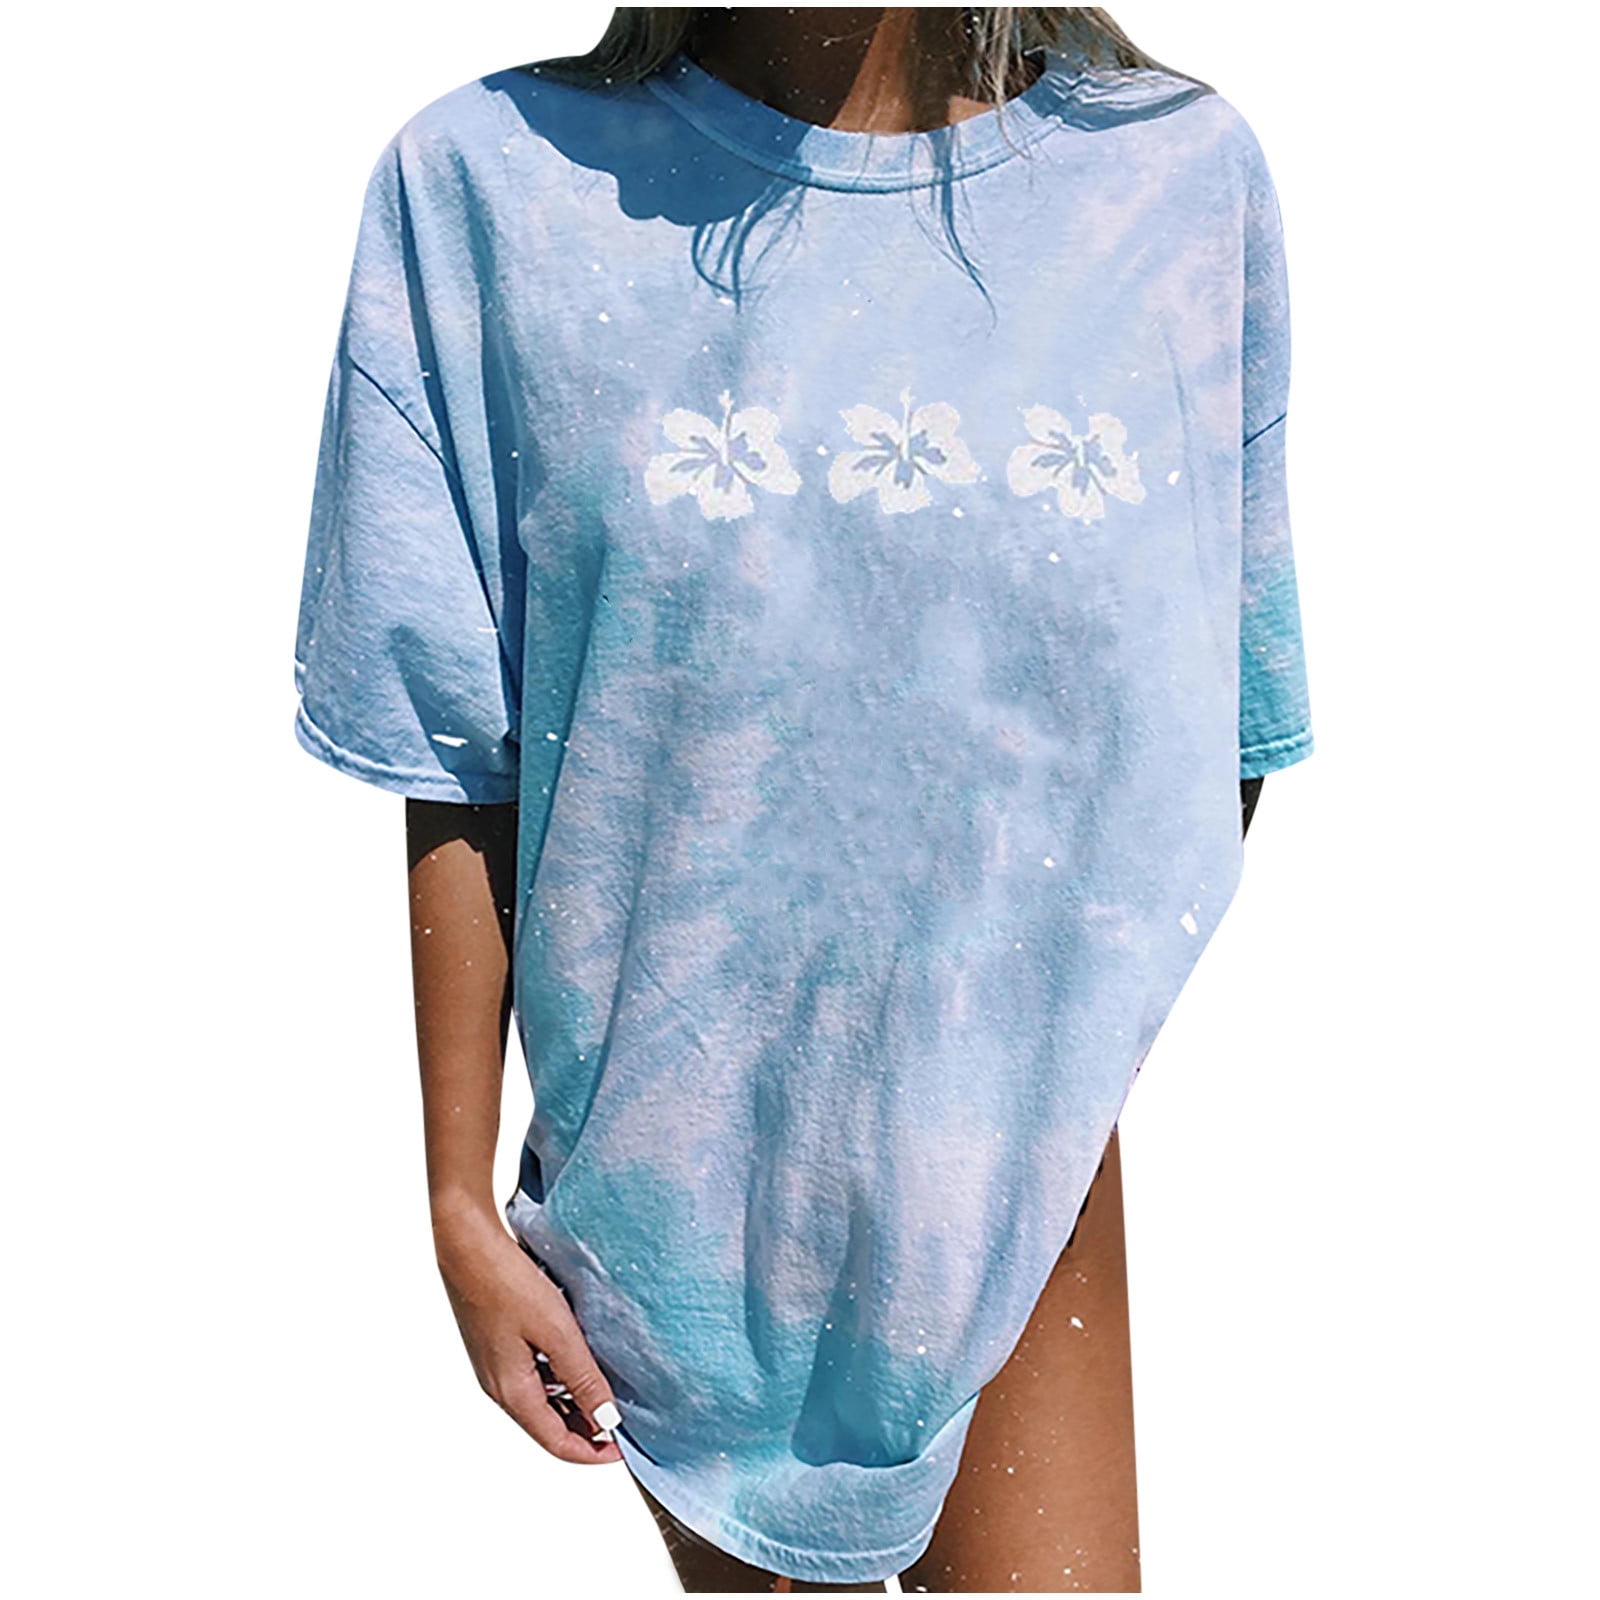 Sun Moon Printed O-Neck T-Shirt for Teen Girls Womens Short Sleeve Casual Tee Tops Fashion Blouse 